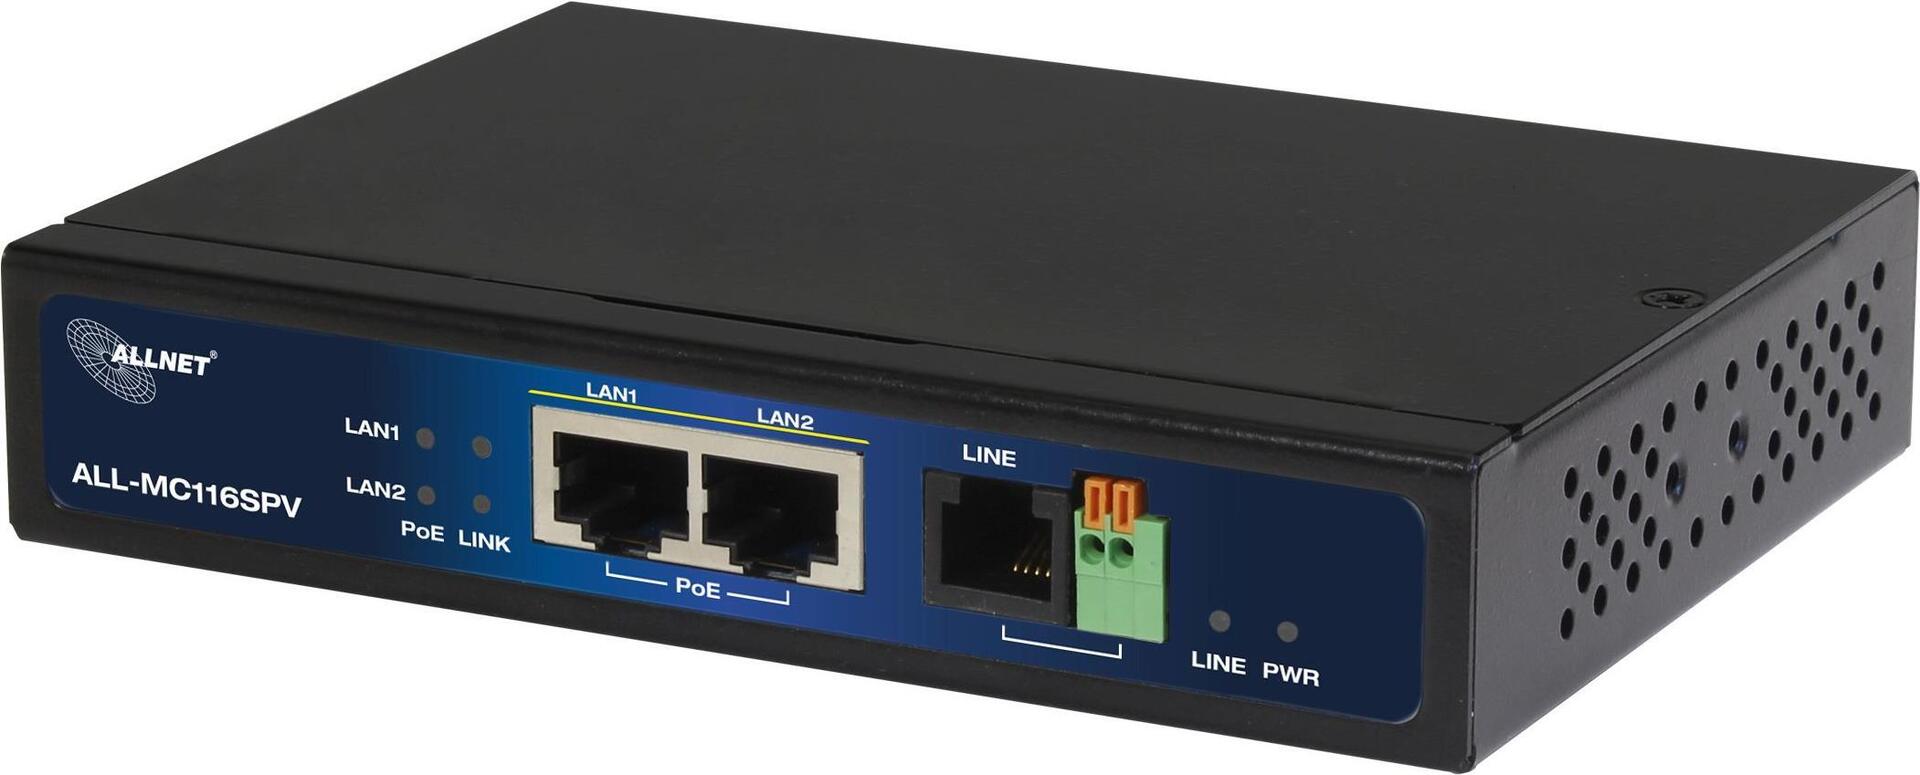 ALLNET ISP Bridge Modem VDSL2 mit Vectoring/Point-to-Point Slave-Modem & 2x PoE IEEE802.3at Ports "unmanaged "ALL-MC116SPV-VDSL2 (A193137)